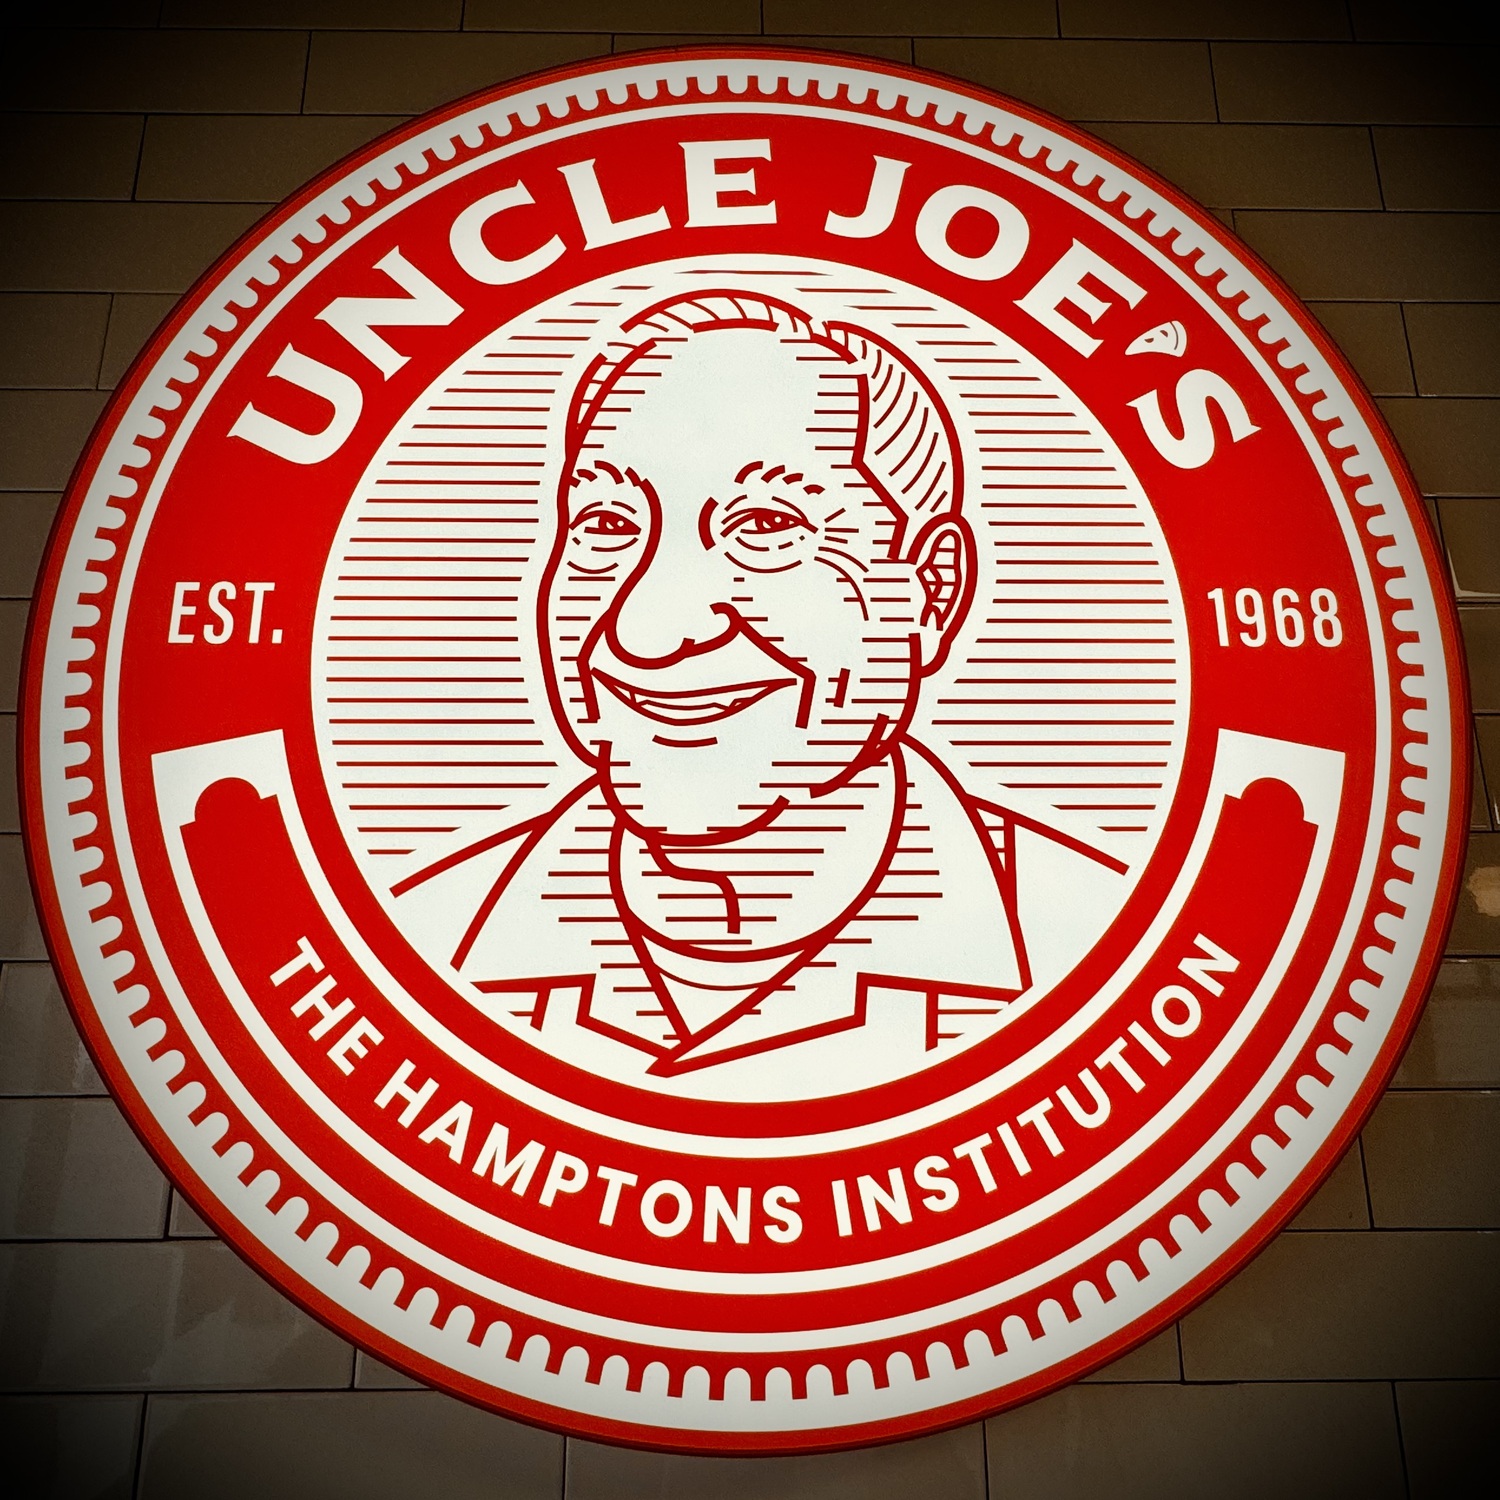 Giuseppe “Joe” Sciara founded the pizzeria in 1968. COURTESY UNCLE JOE'S FAMOUS PIZZERIA